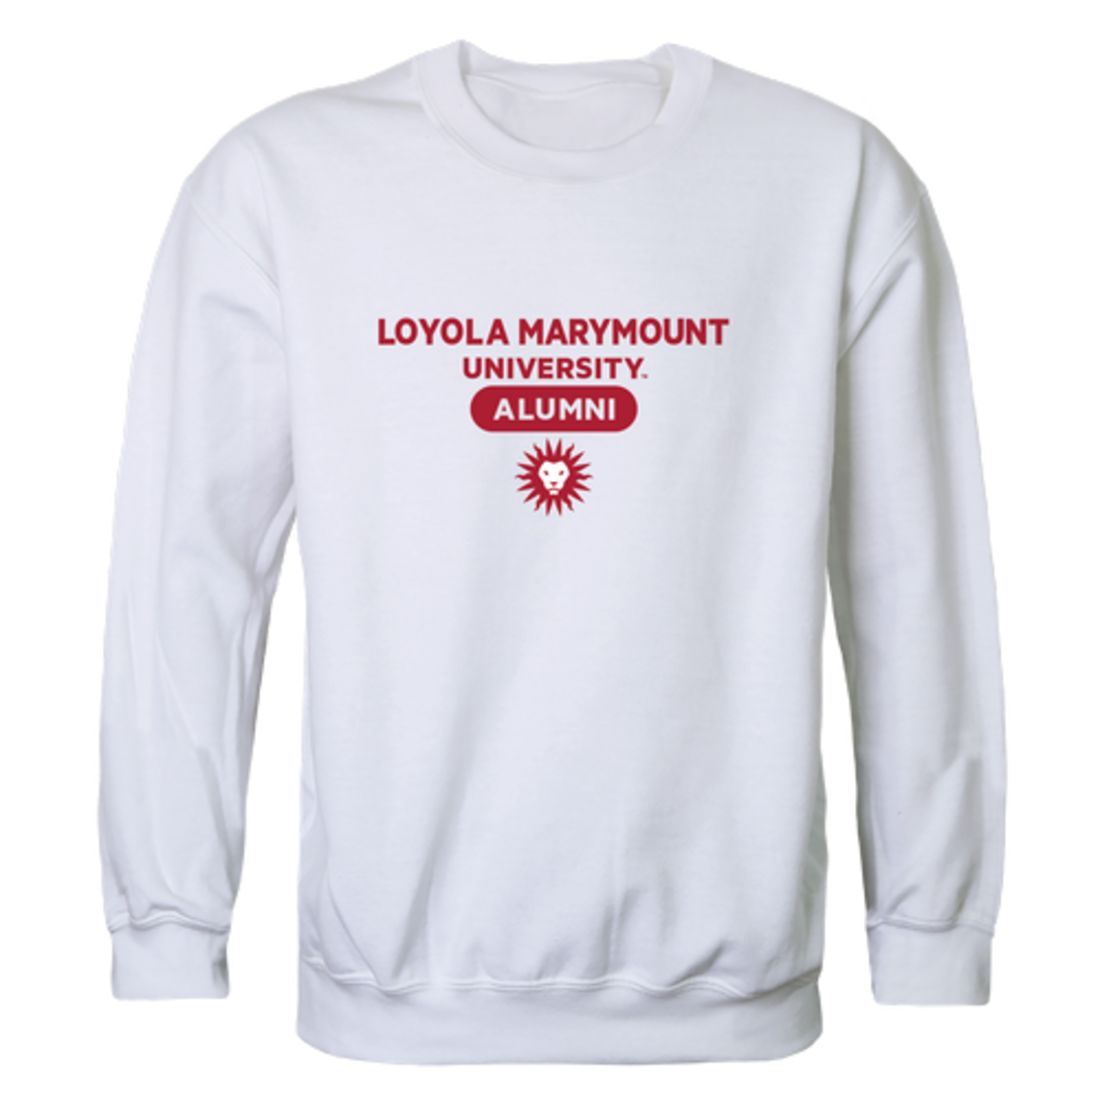 LMU Loyola Marymount University Lions Alumni Fleece Crewneck Pullover Sweatshirt Heather Charcoal-Campus-Wardrobe